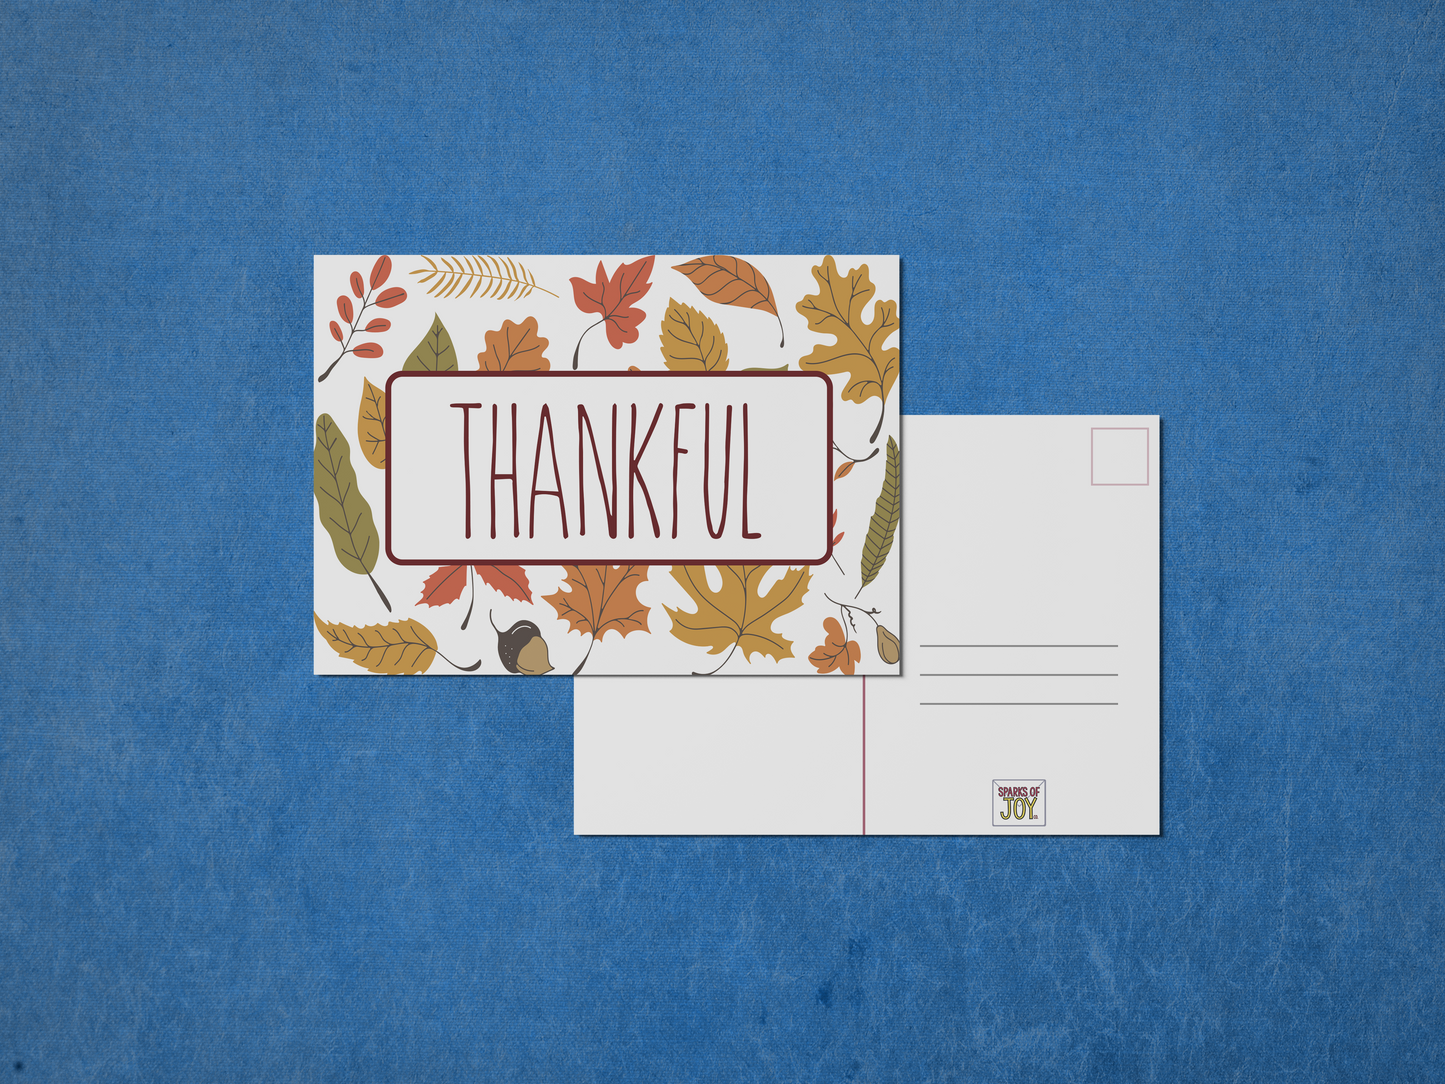 Thankful - Postcard